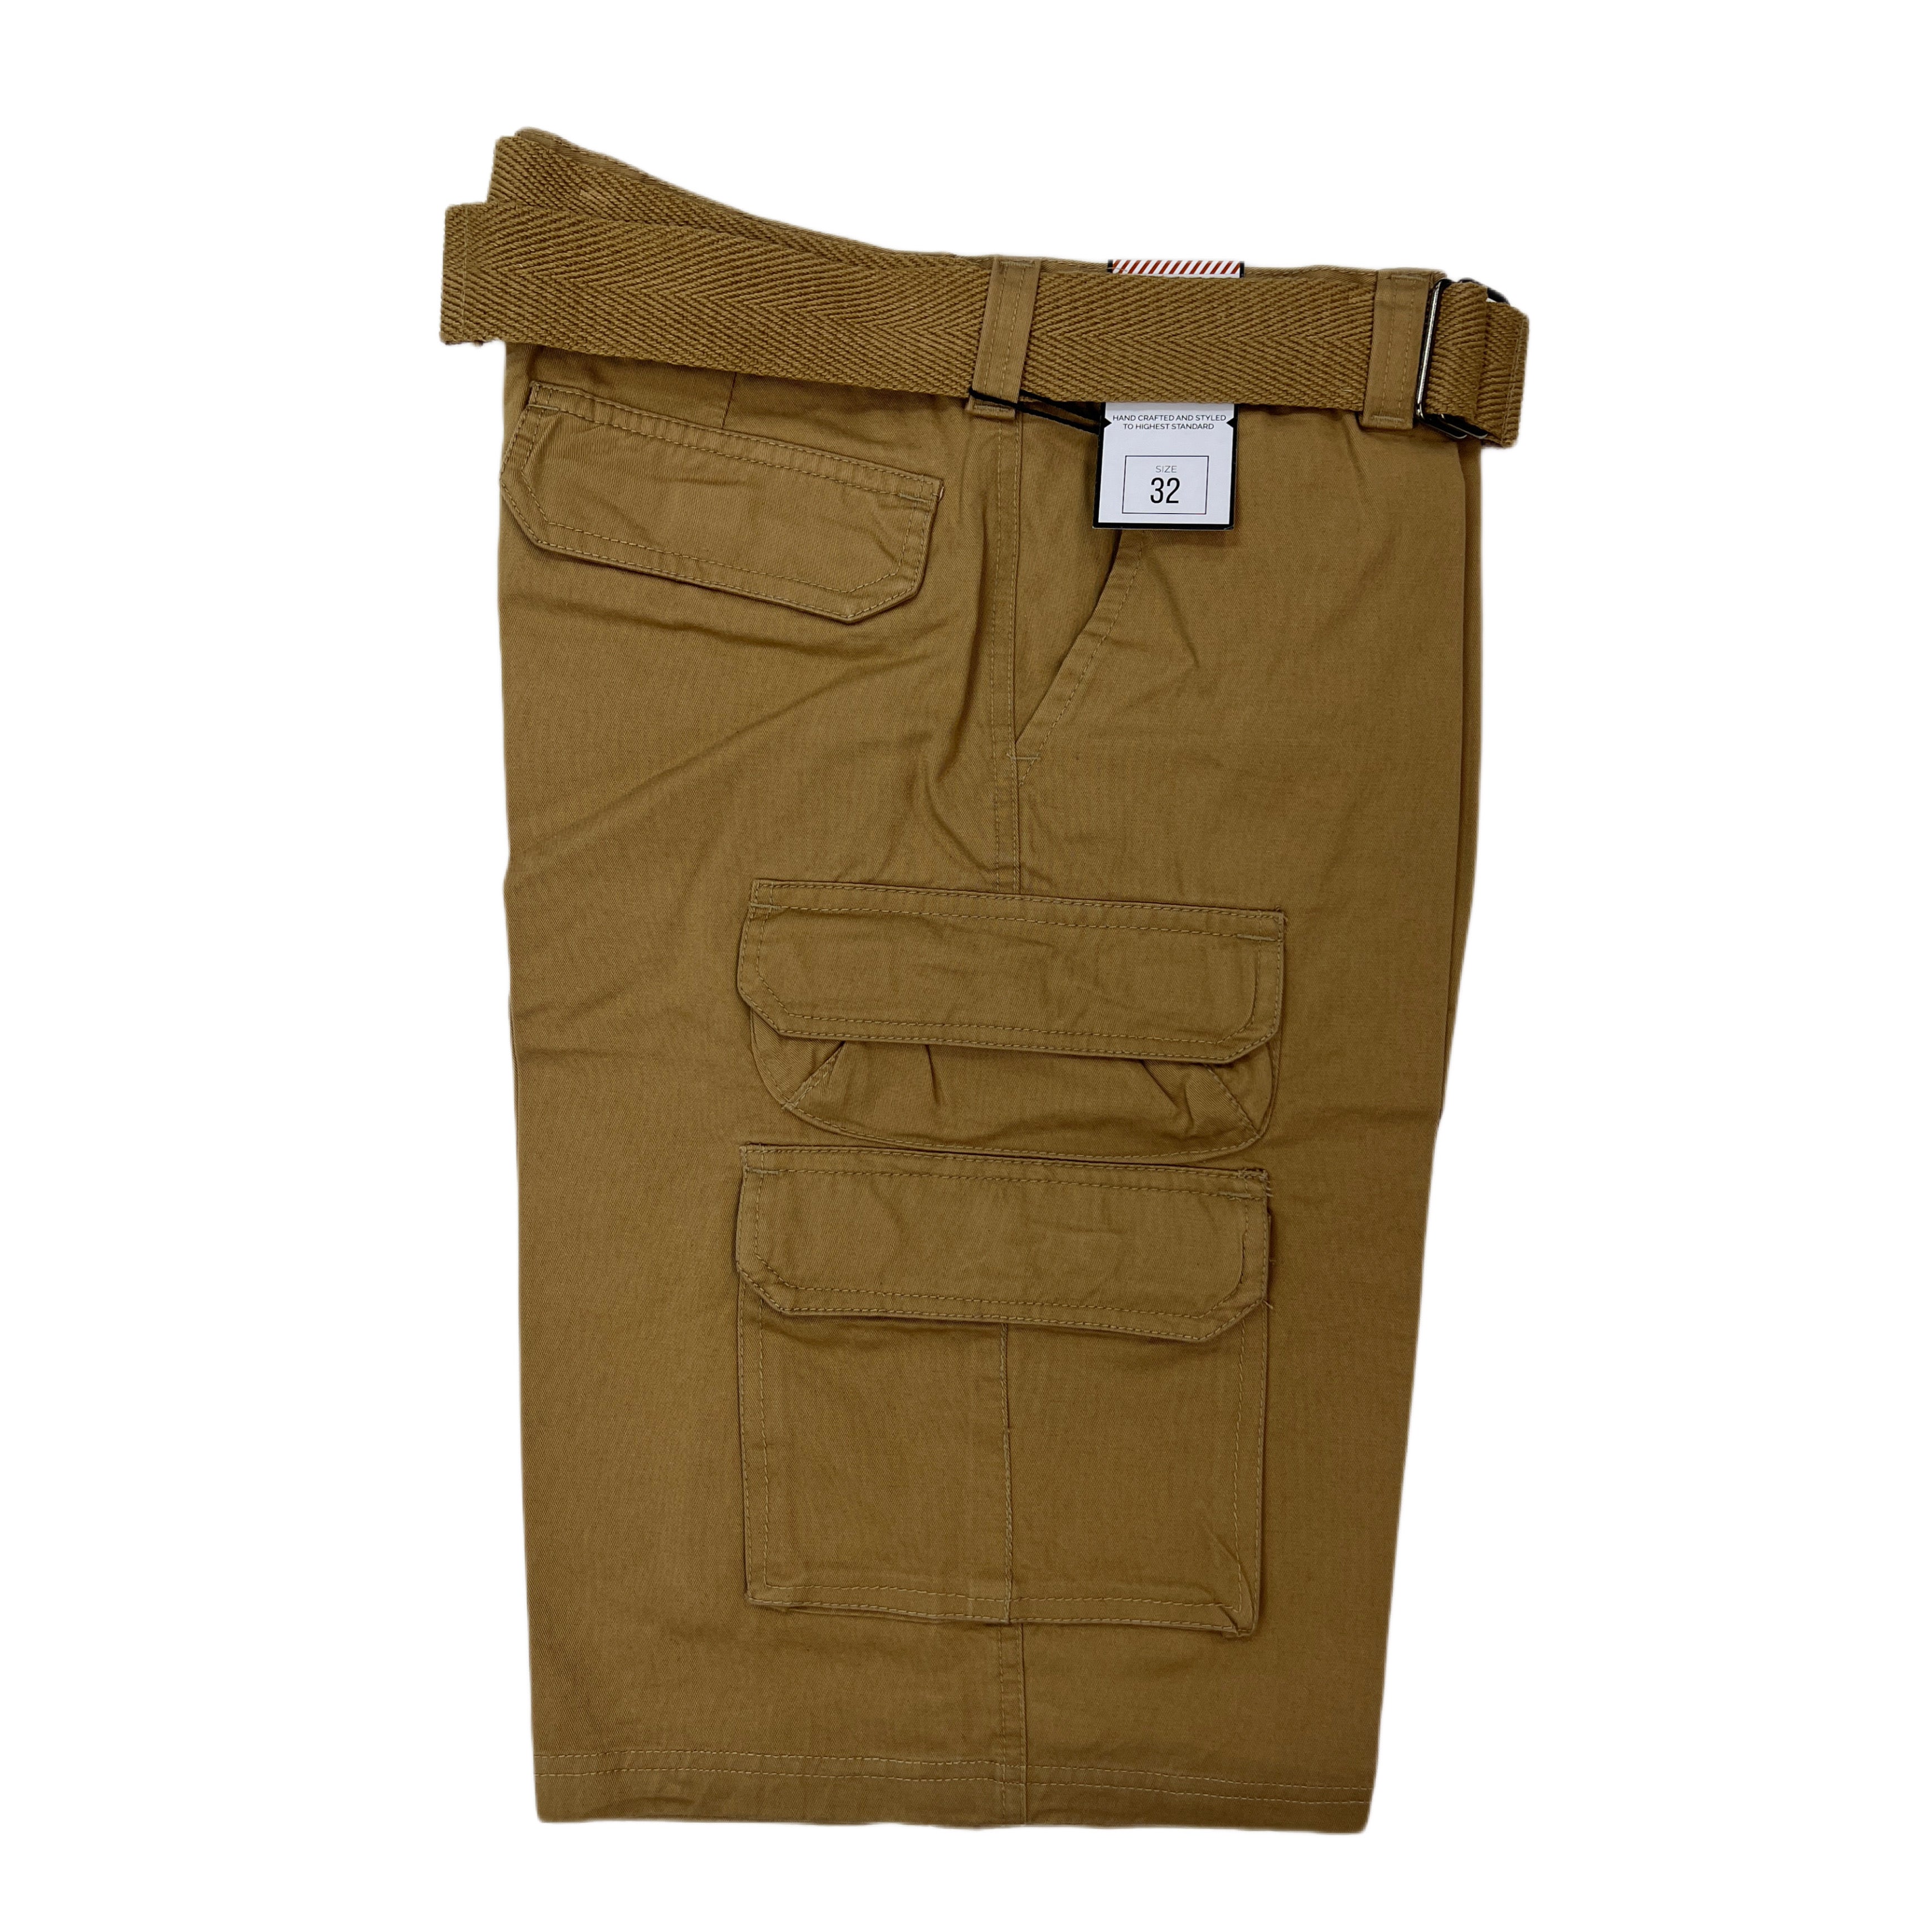 Triveni Cargo Shorts (Solid)